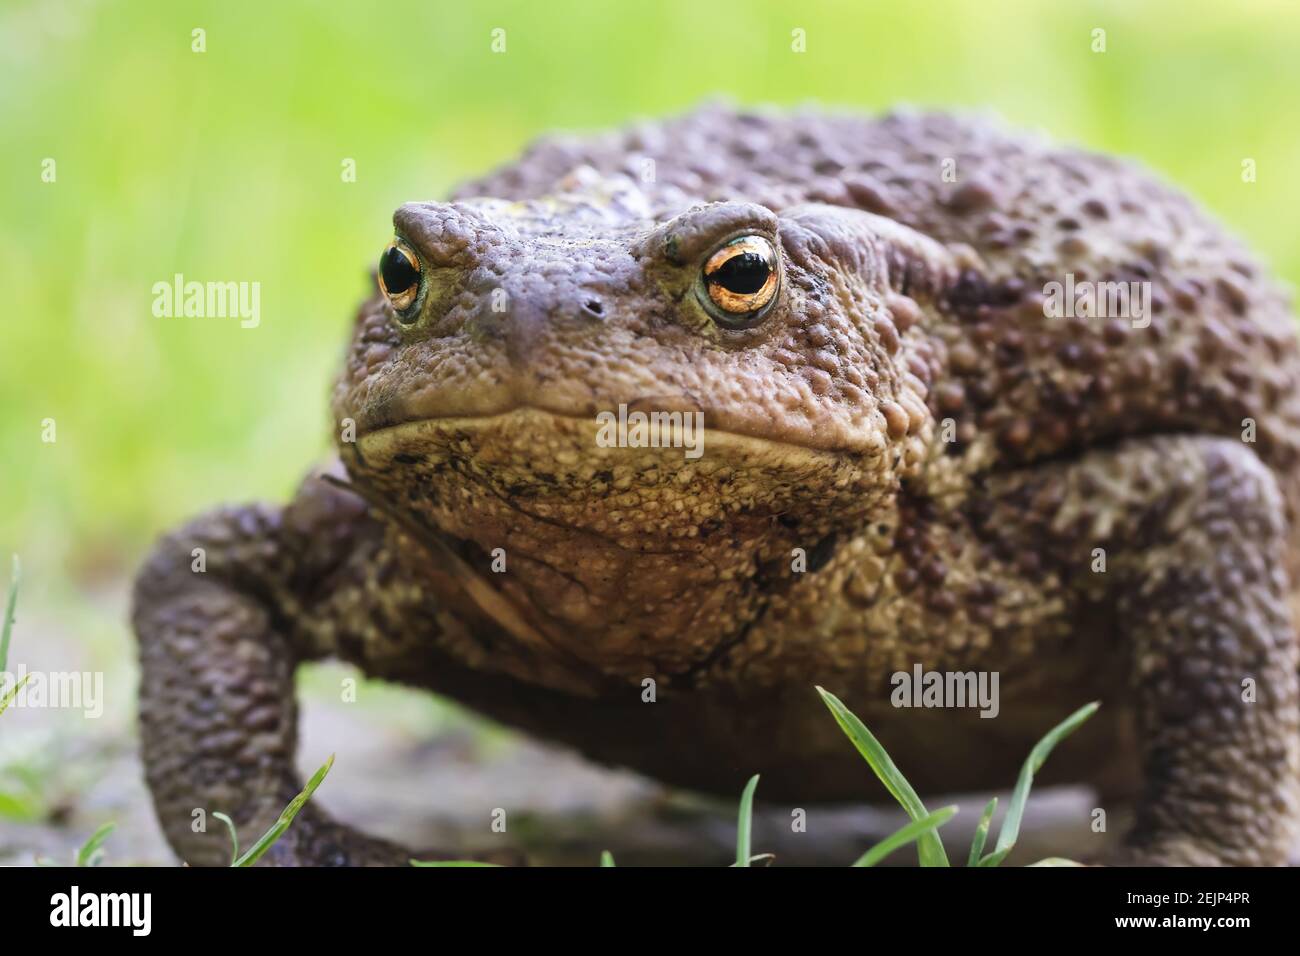 Big fat toad crawling along a dirt path. Stock Photo